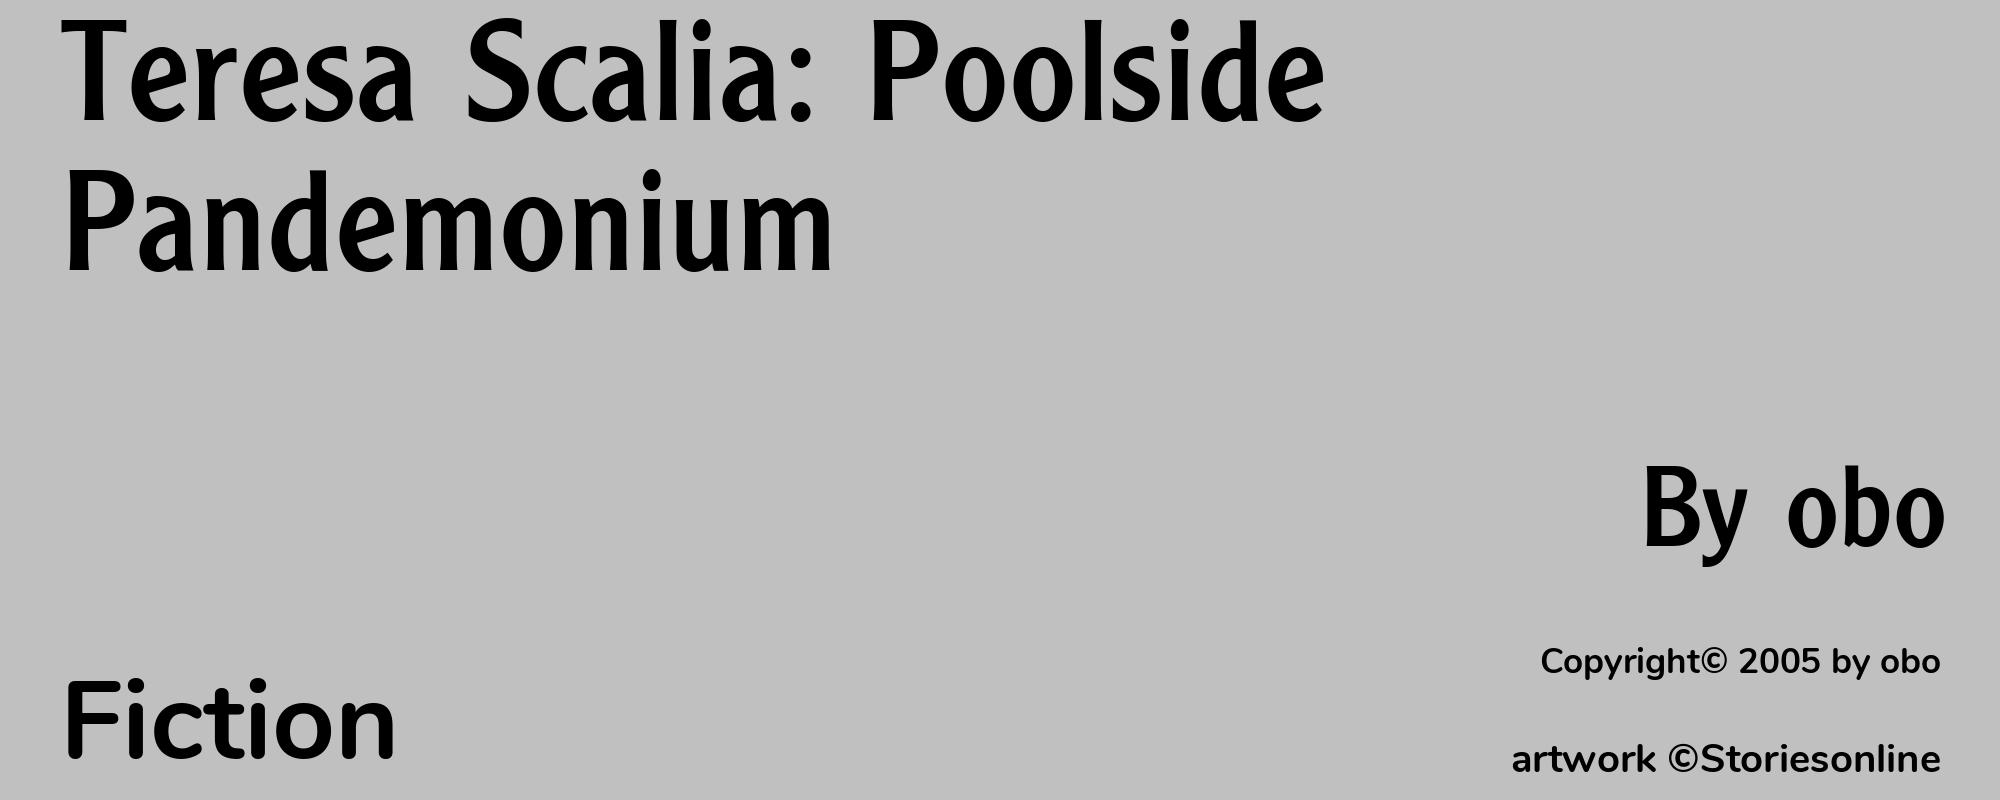 Teresa Scalia: Poolside Pandemonium - Cover